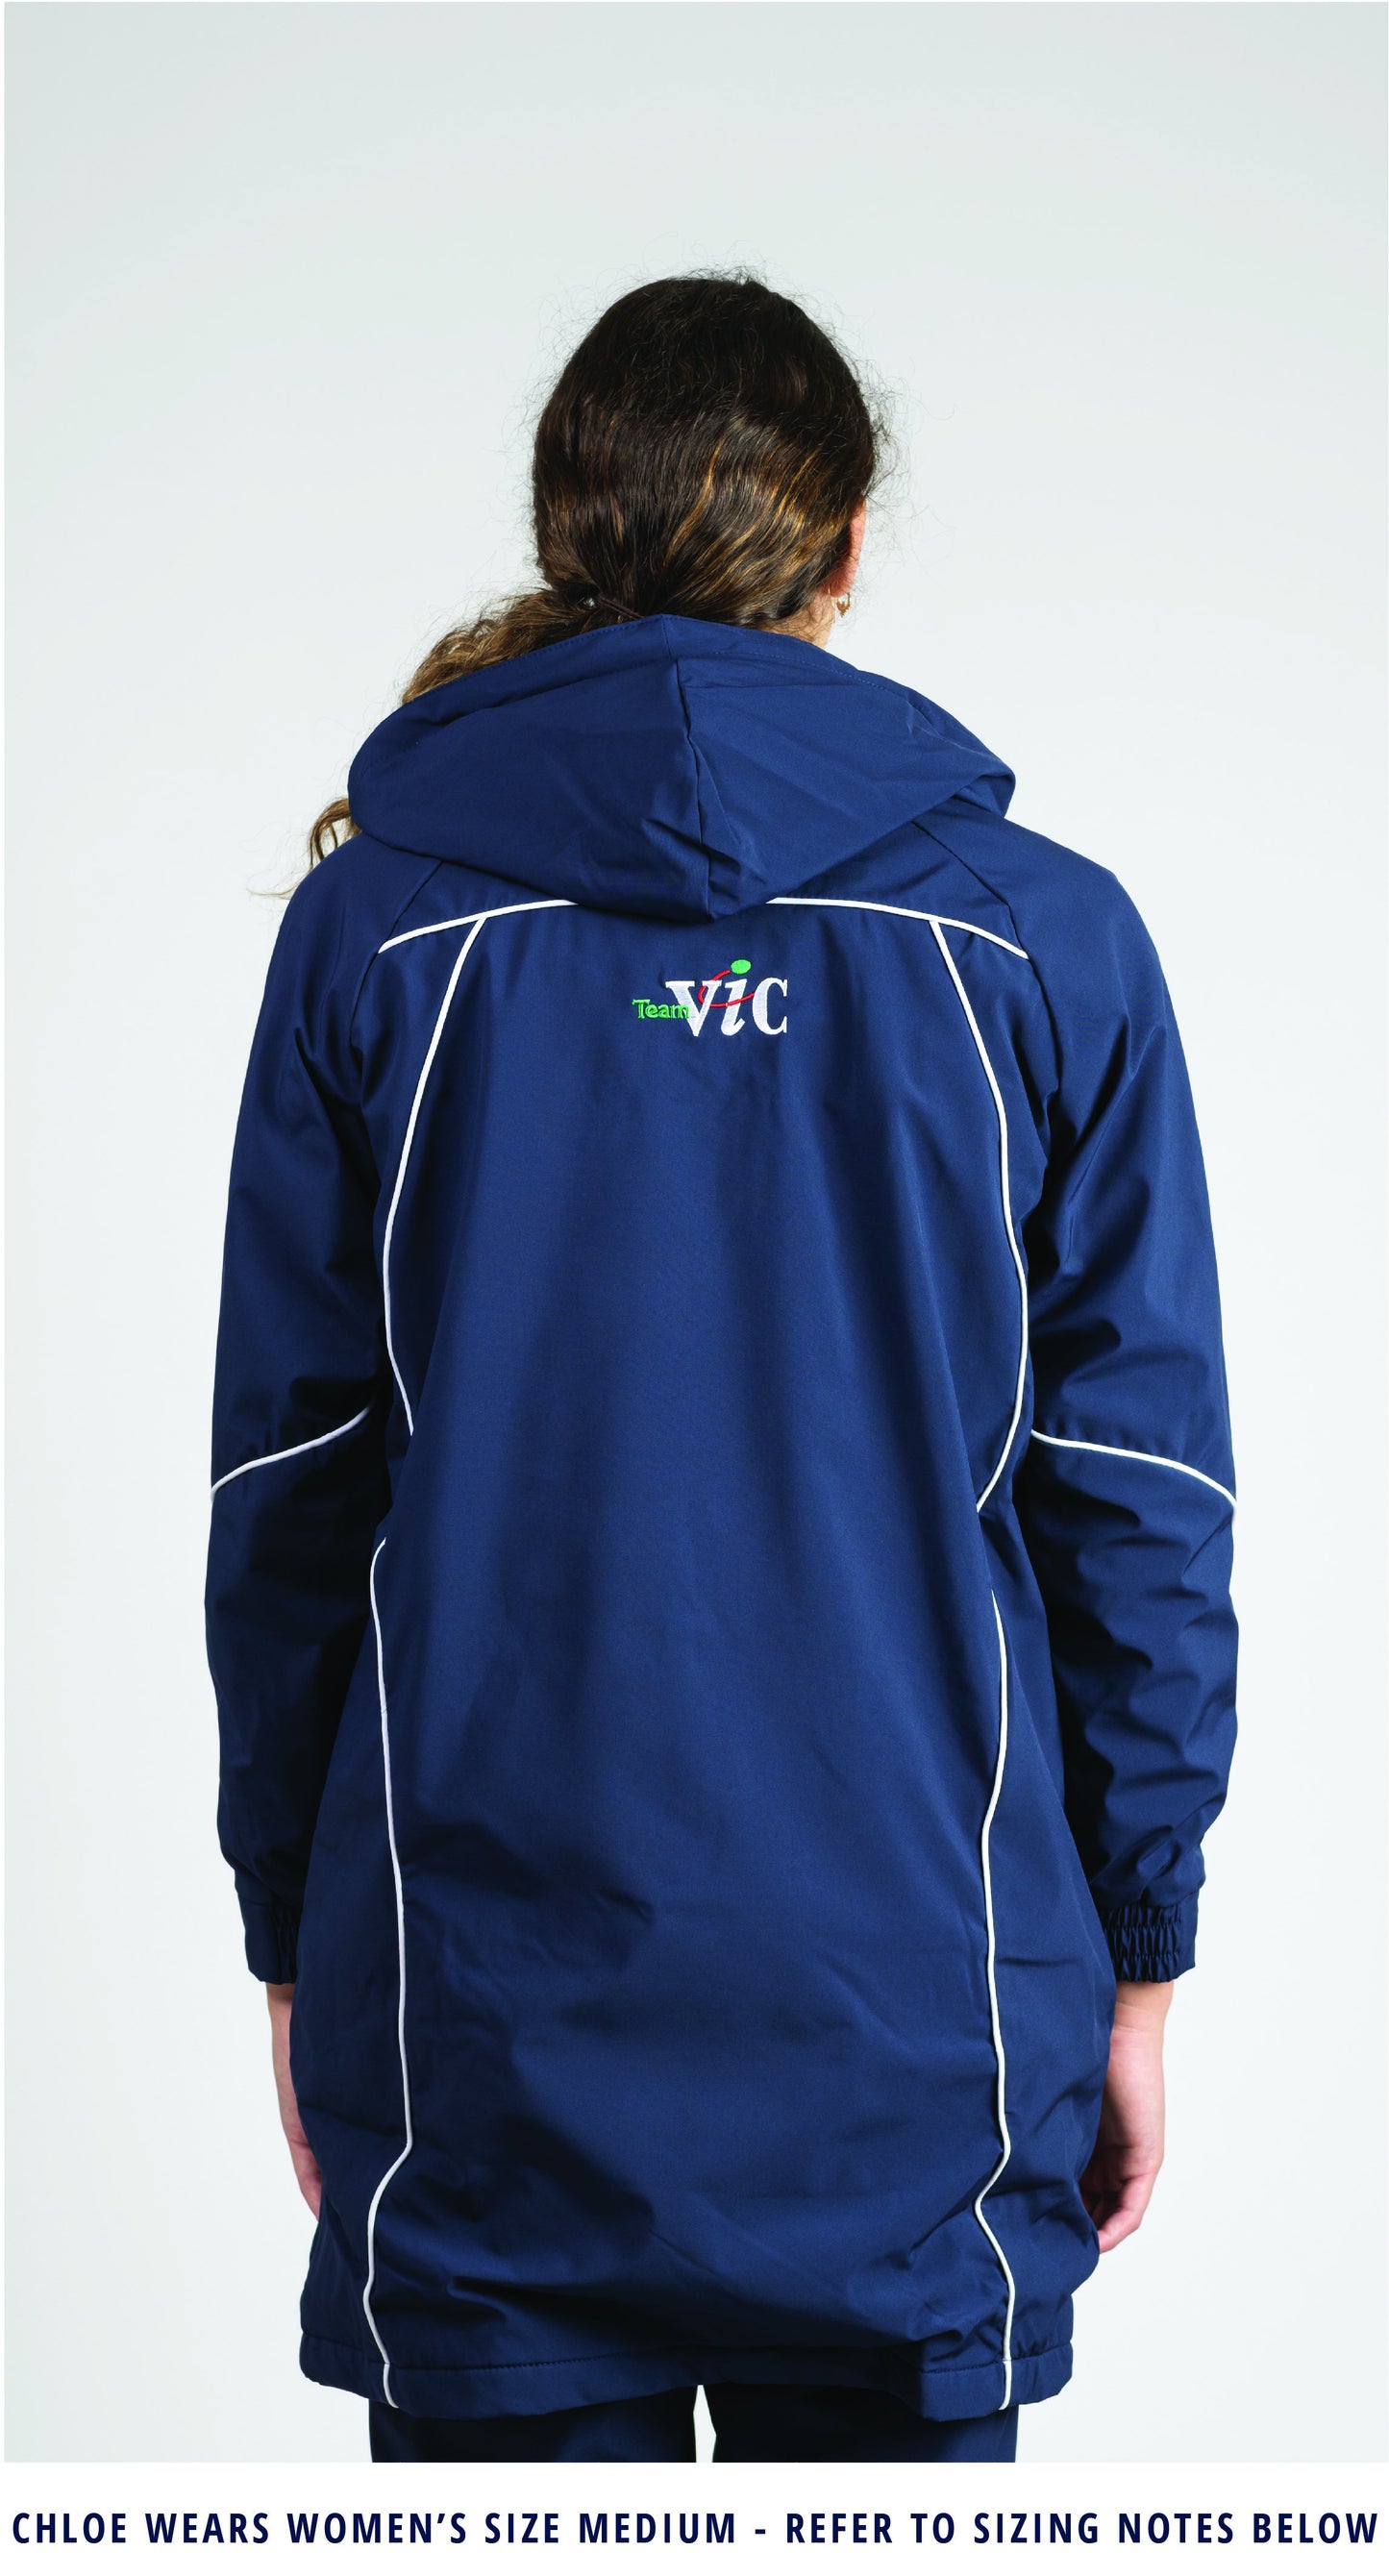 Female Team Vic DINTEX Coat